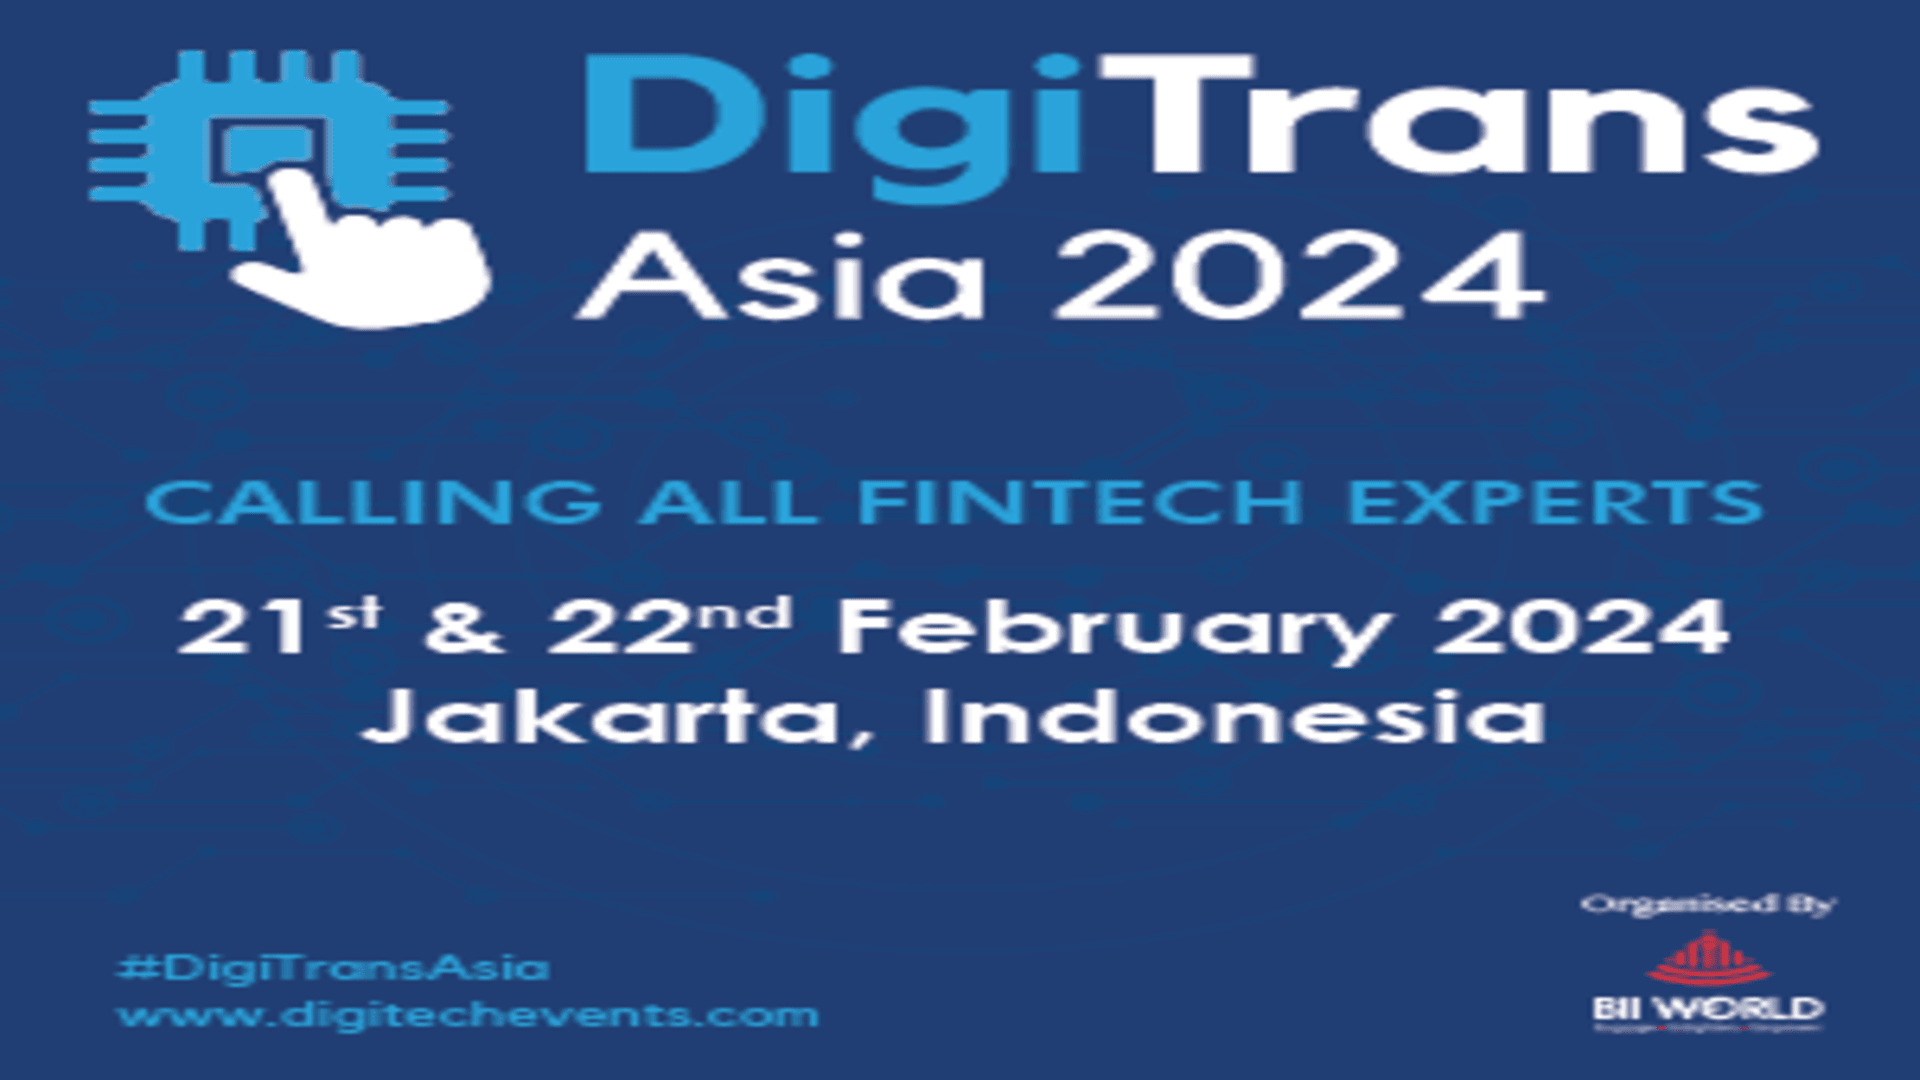 DigiTrans Asia 2024: Navigating the Digital Horizon in Southeast Asia